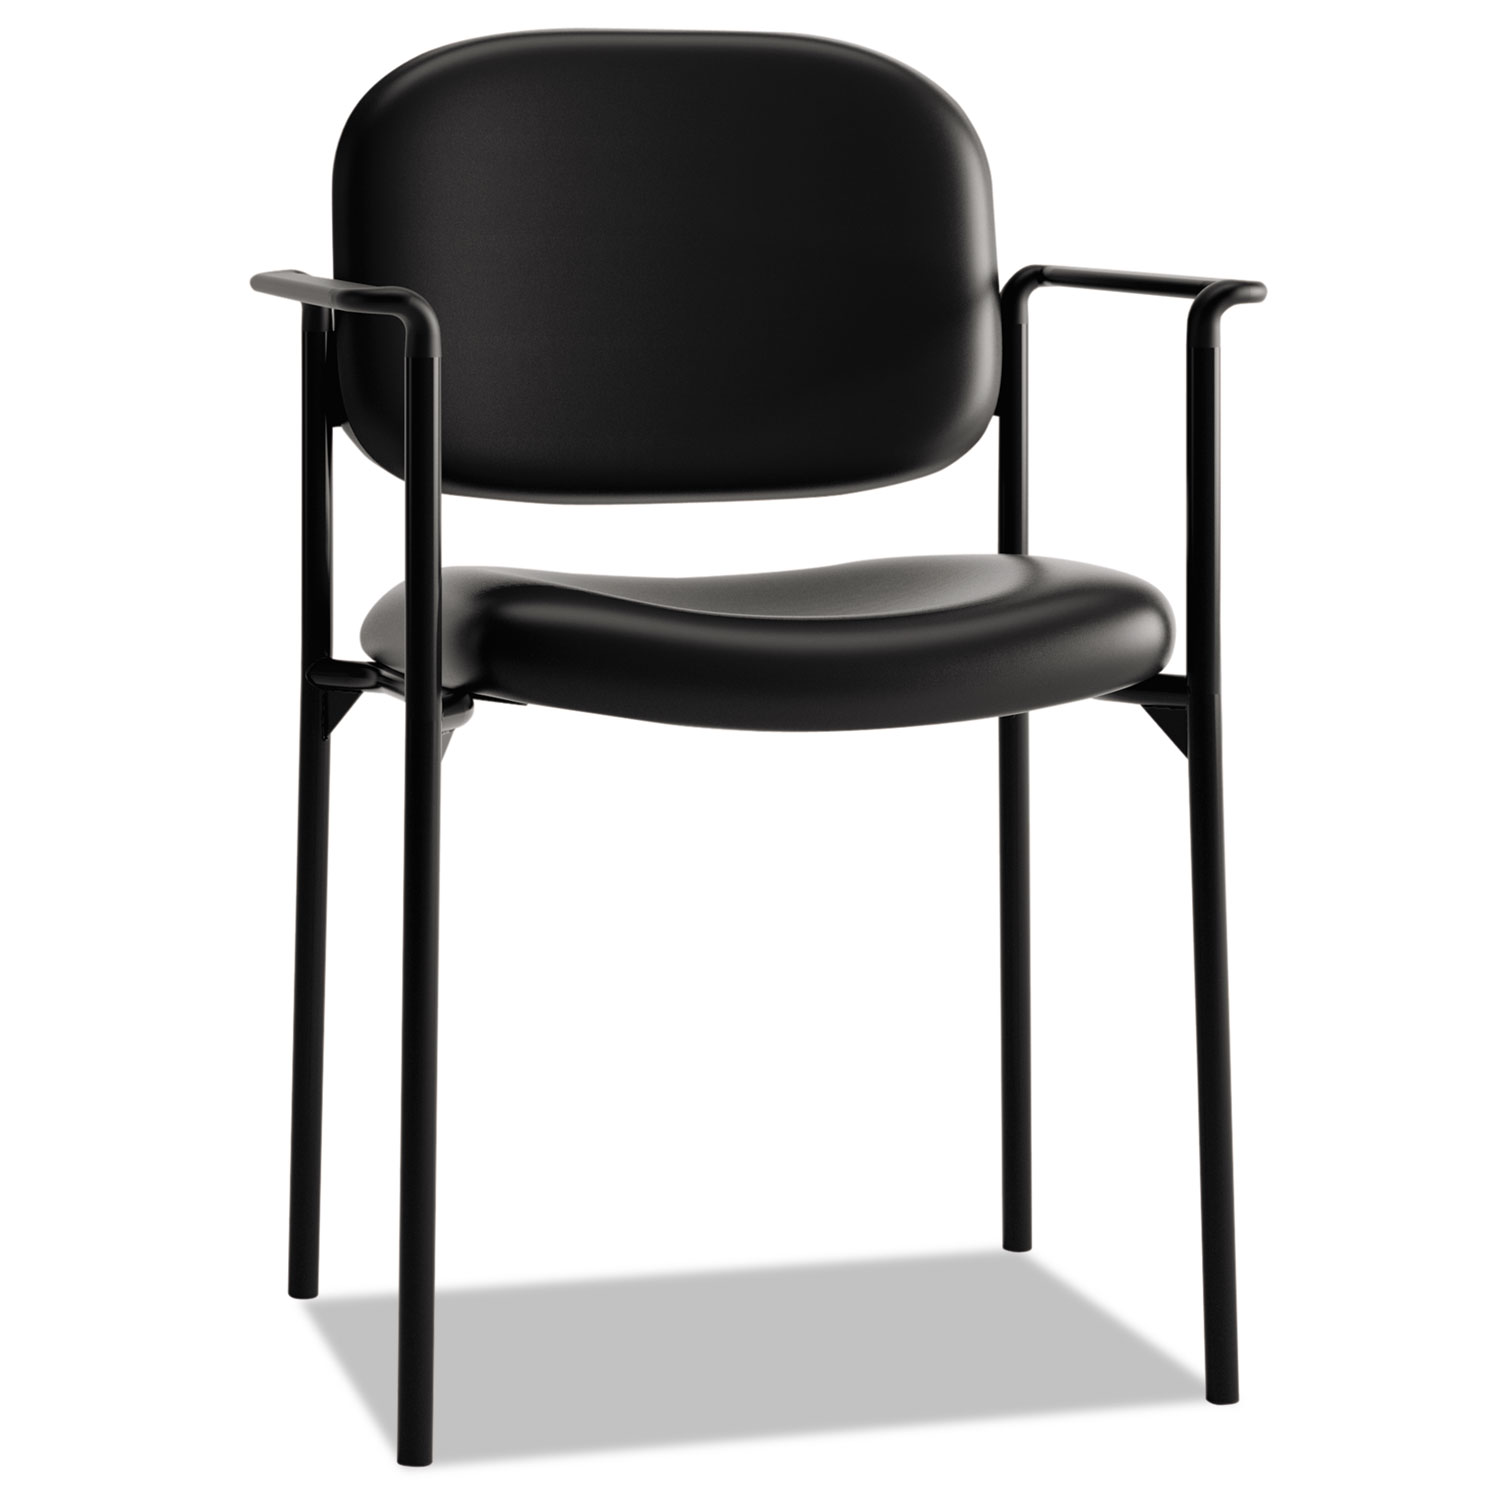  HON HVL616.SB11 VL616 Stacking Guest Chair with Arms, Black Seat/Black Back, Black Base (BSXVL616SB11) 